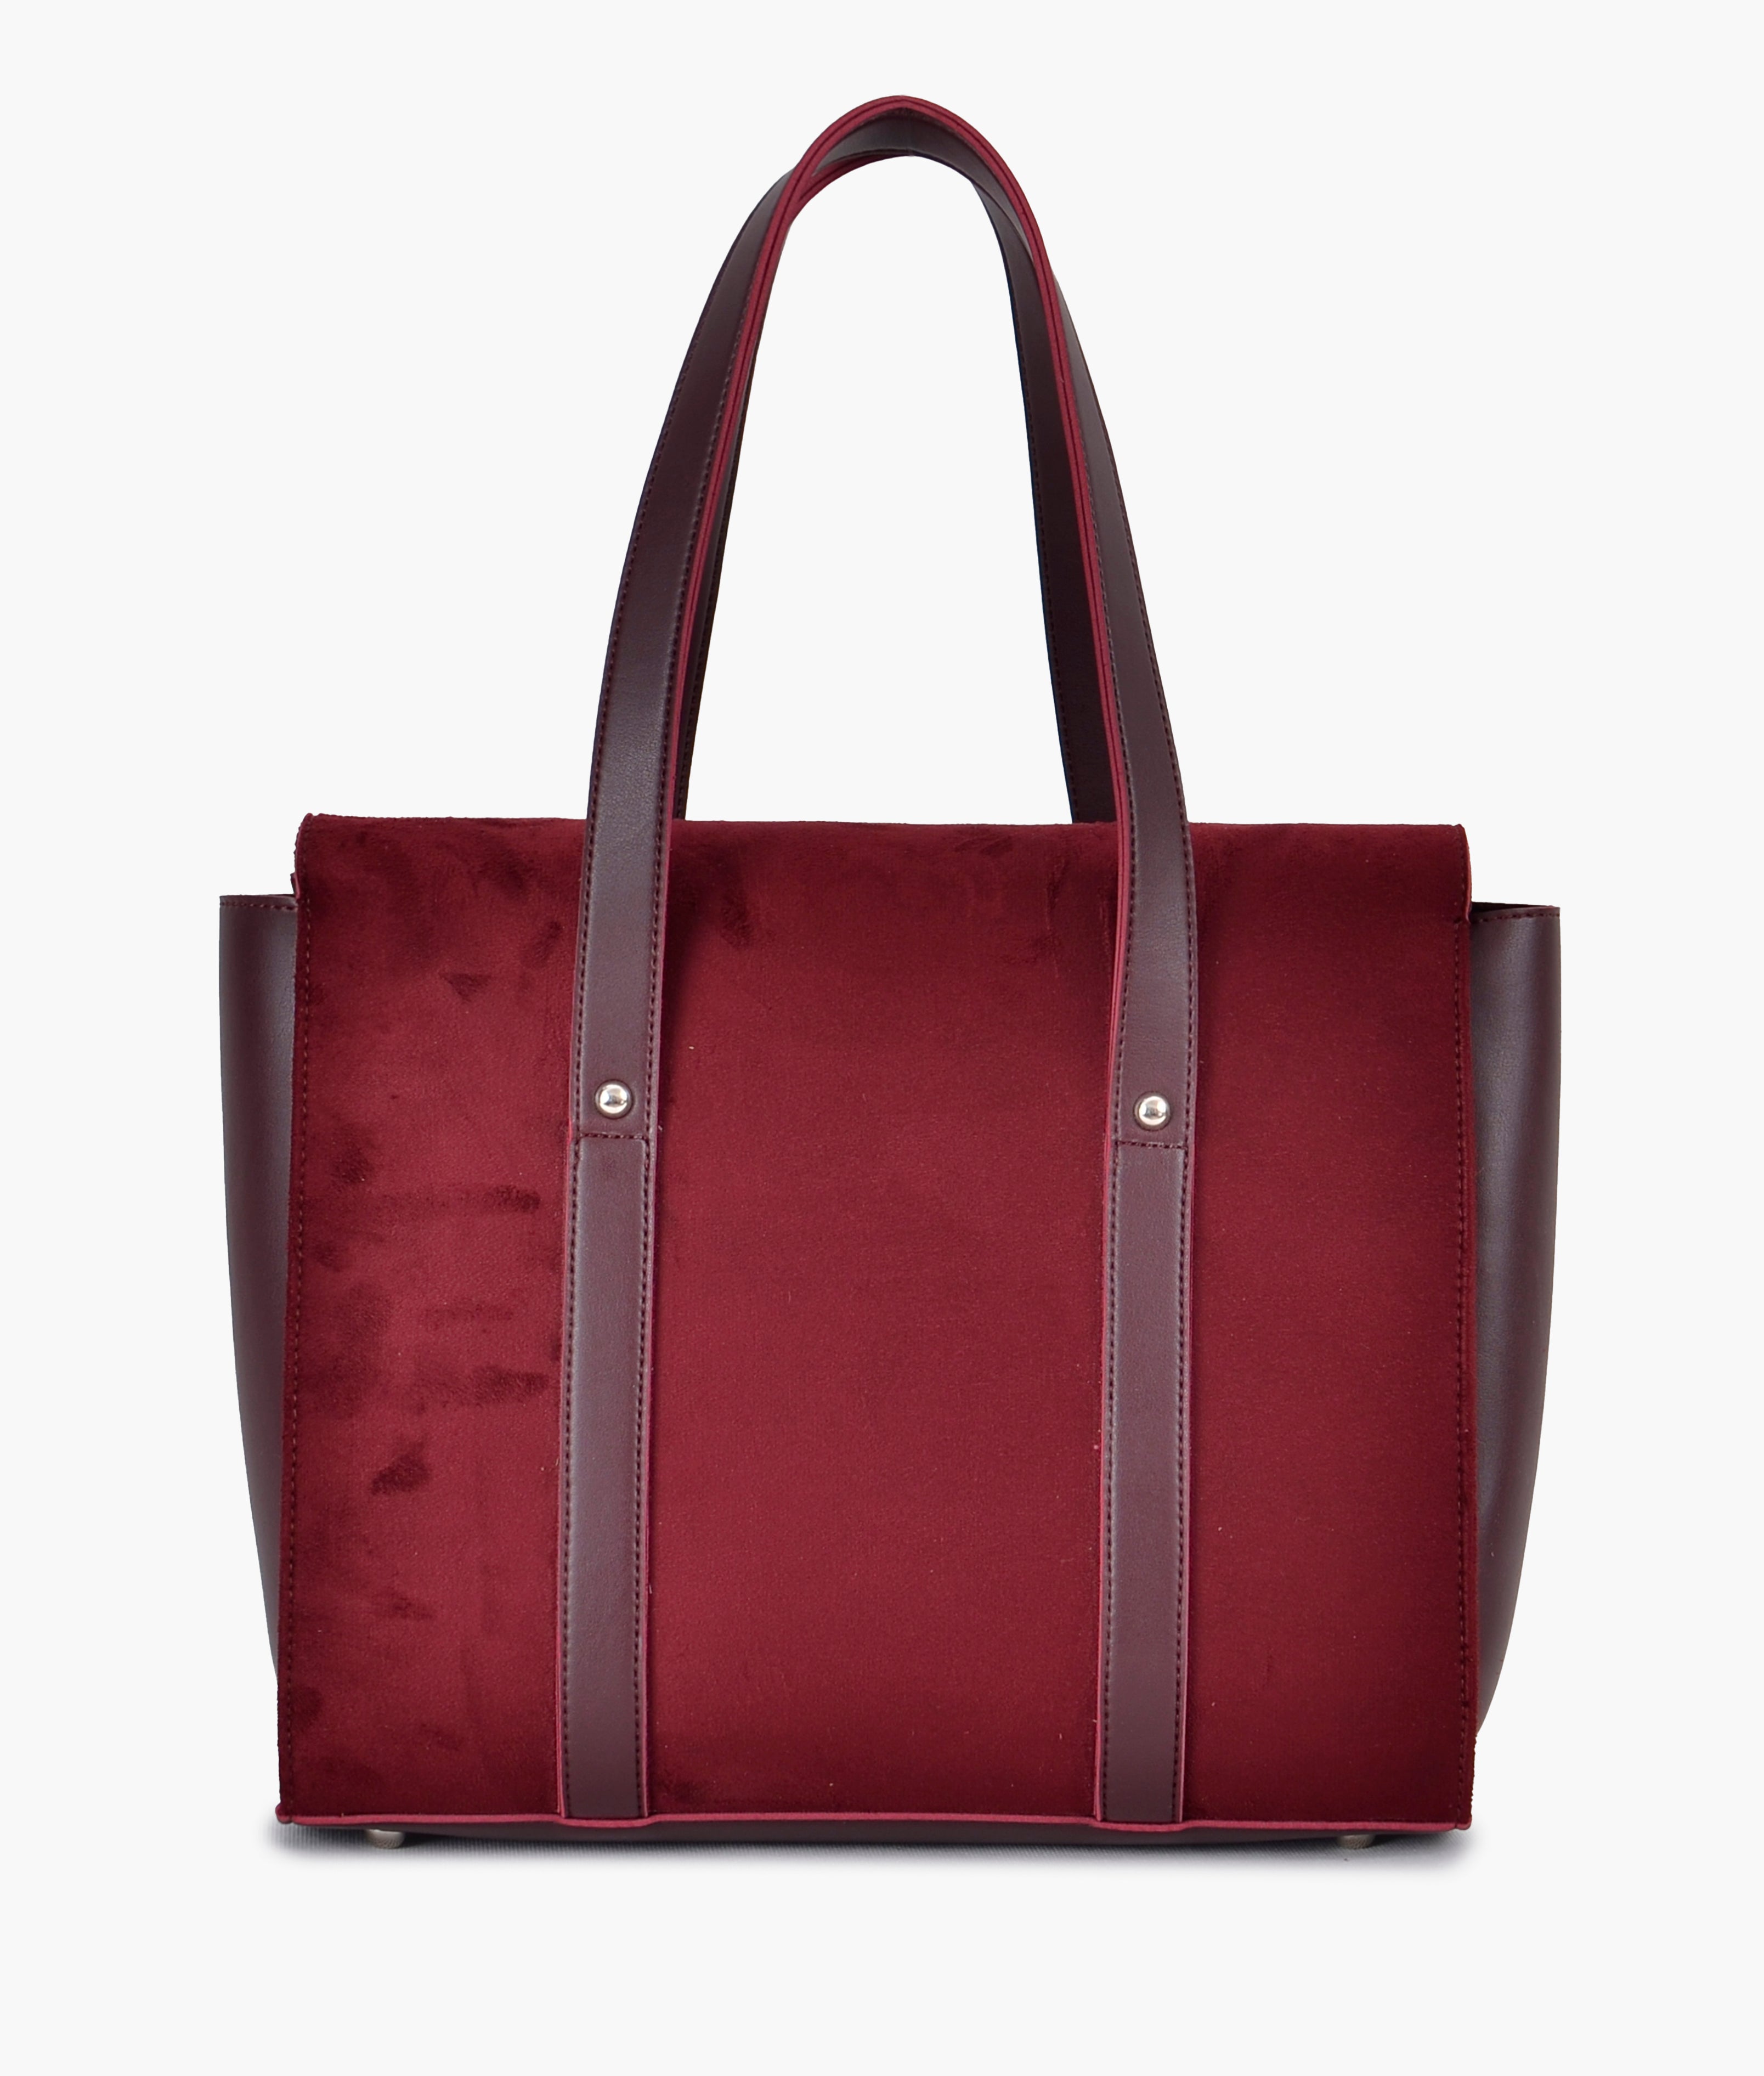 Burgundy suede carry-all satchel bag